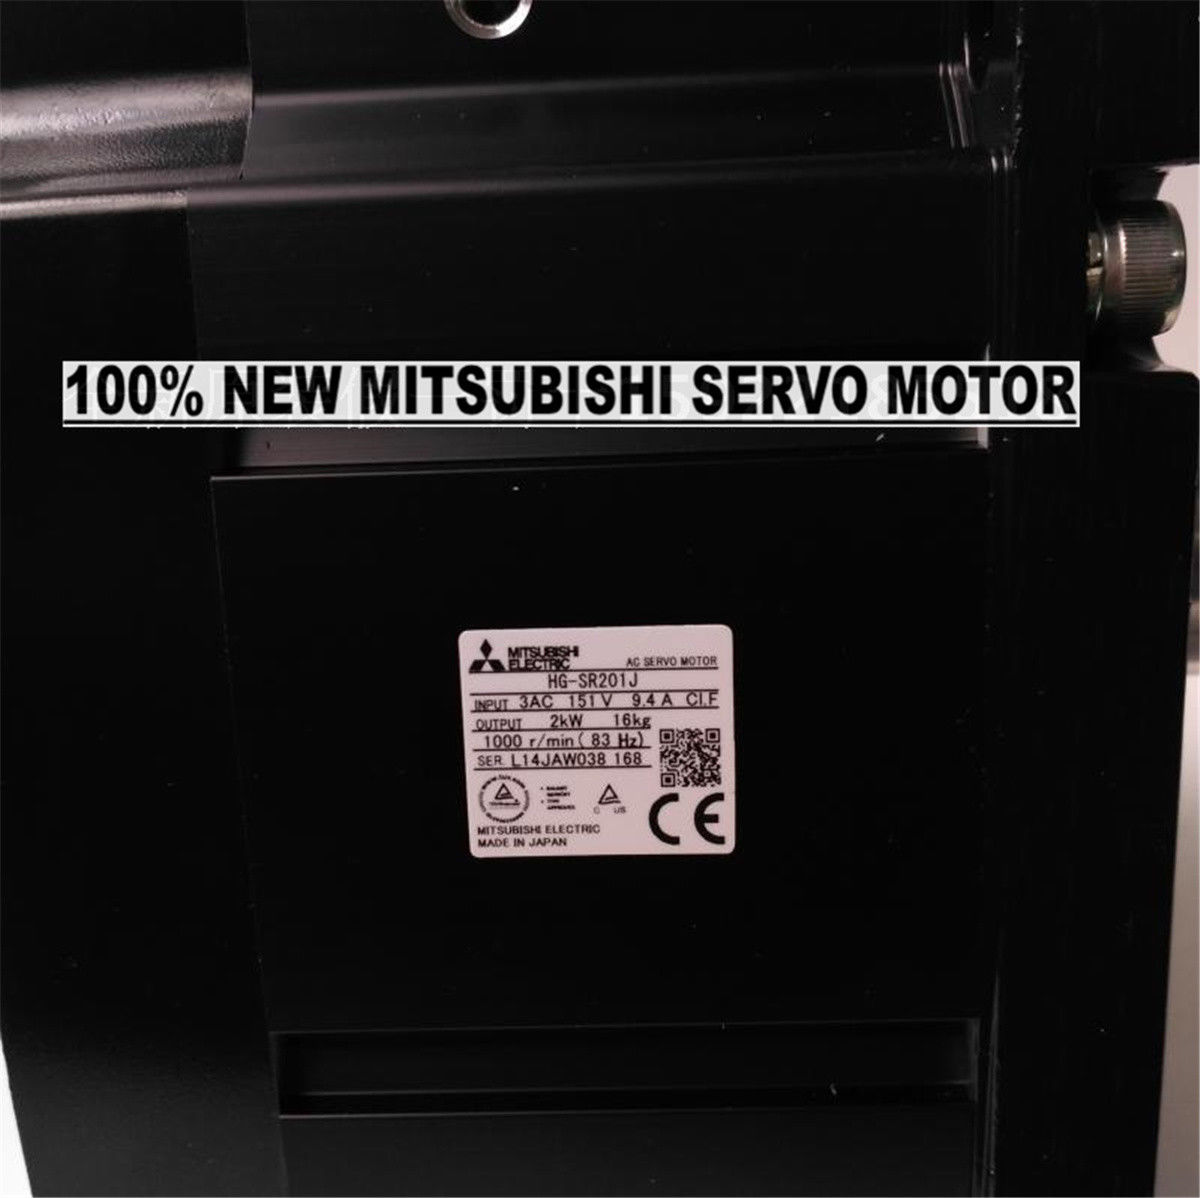 NEW Mitsubishi Servo Motor HG-SR201J in box HGSR201J - Click Image to Close